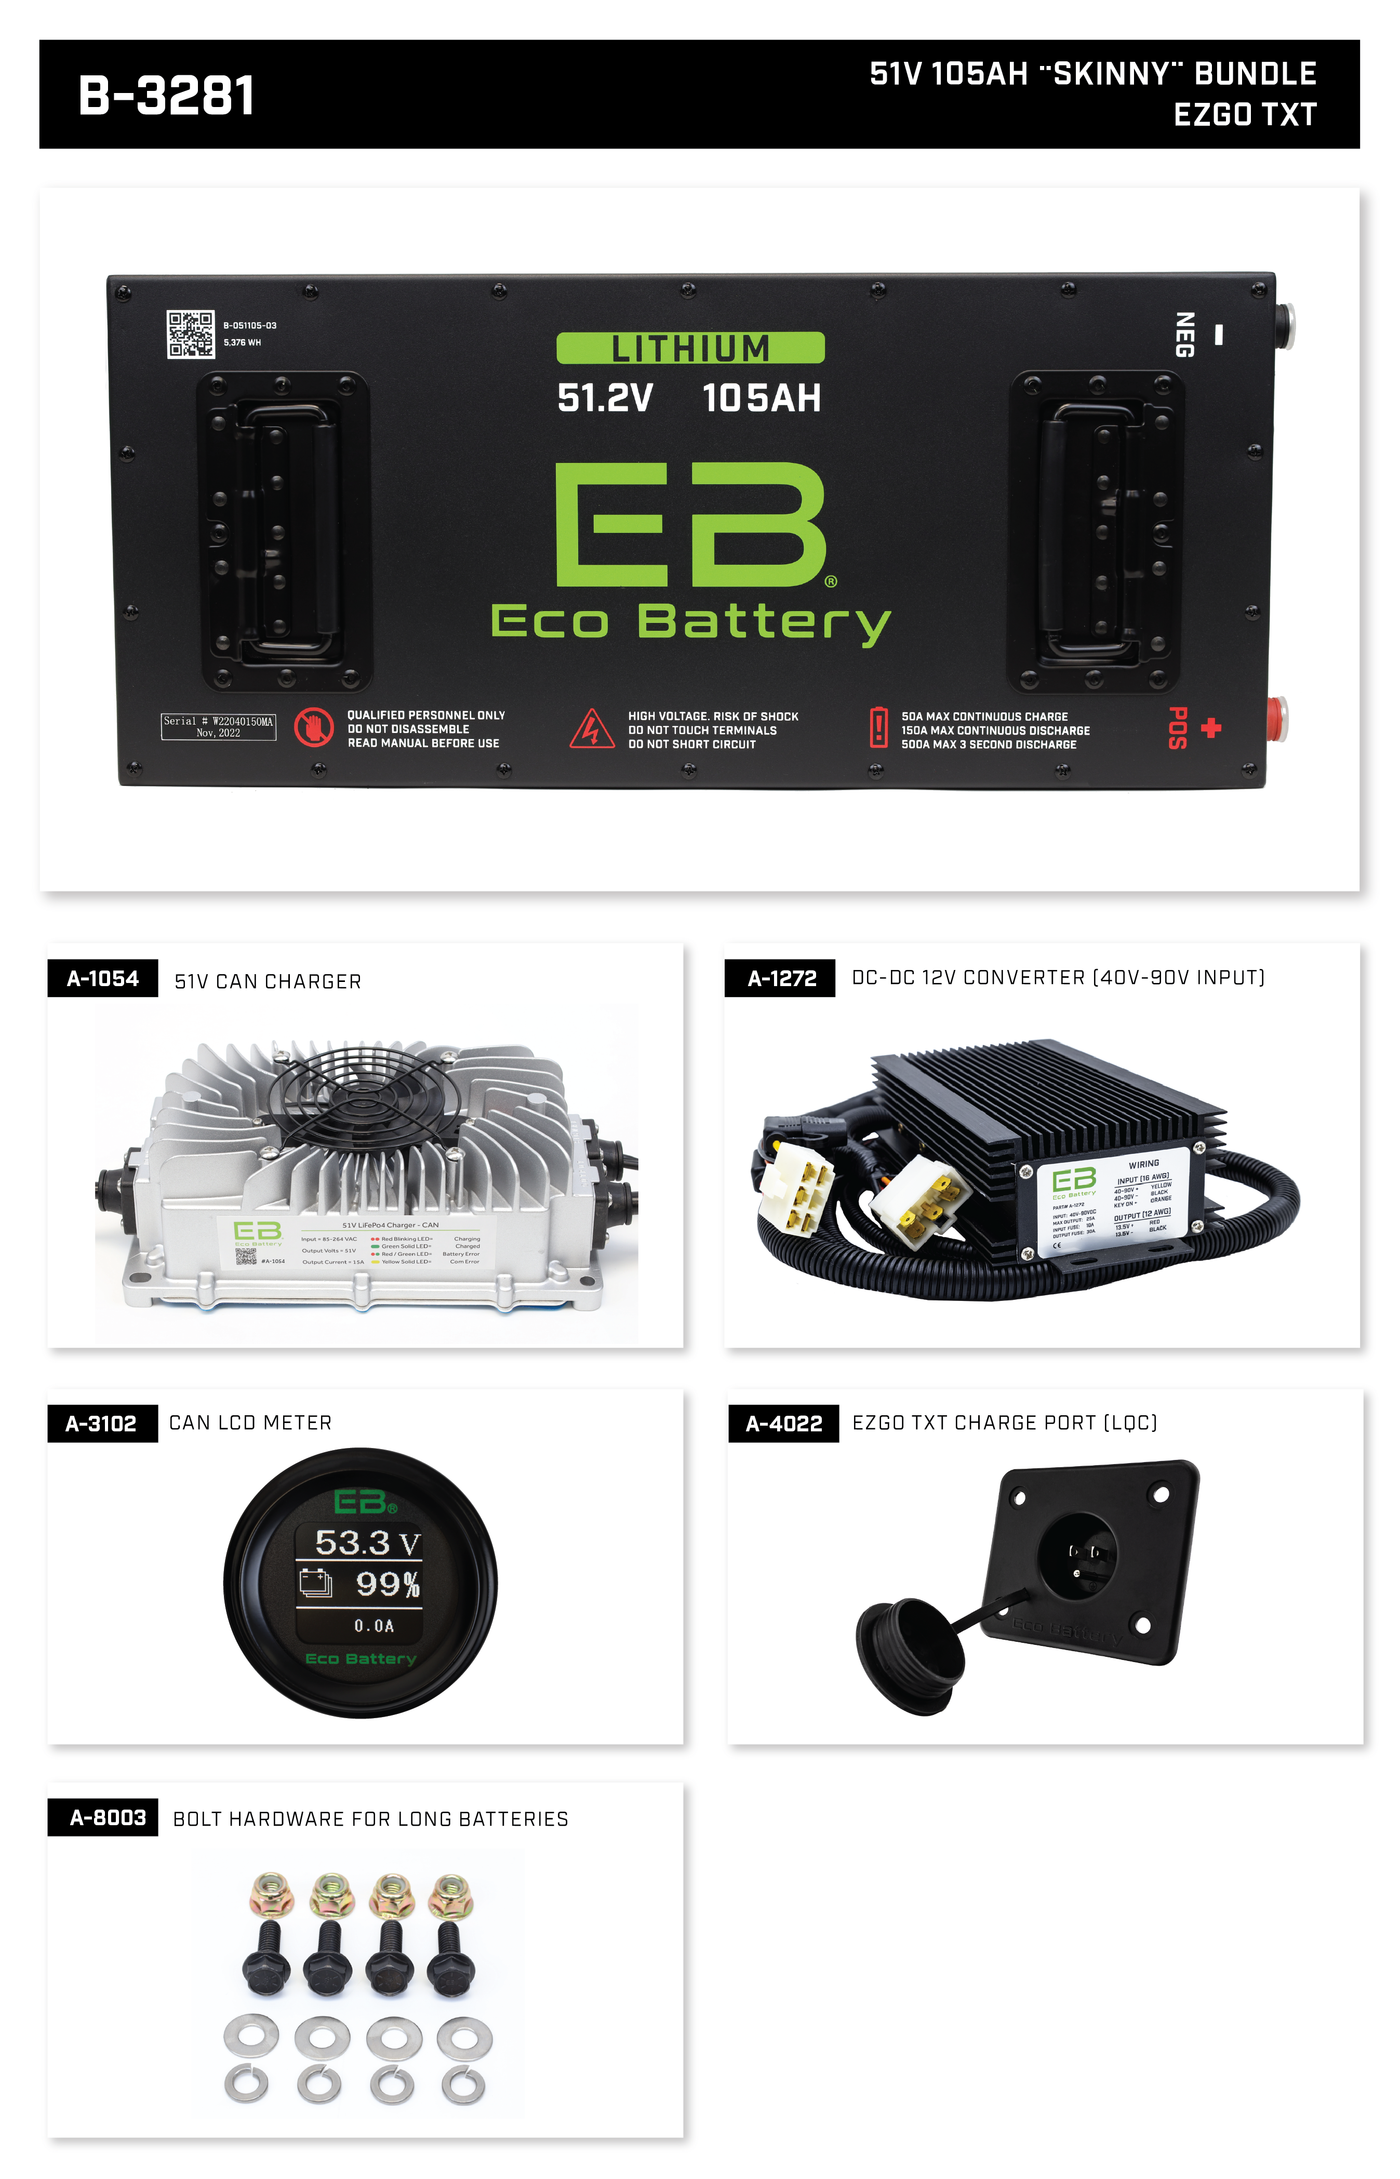 Eco Battery LIFEPO4 Lithium 48v 105ah Golf Cart Battery Bundle